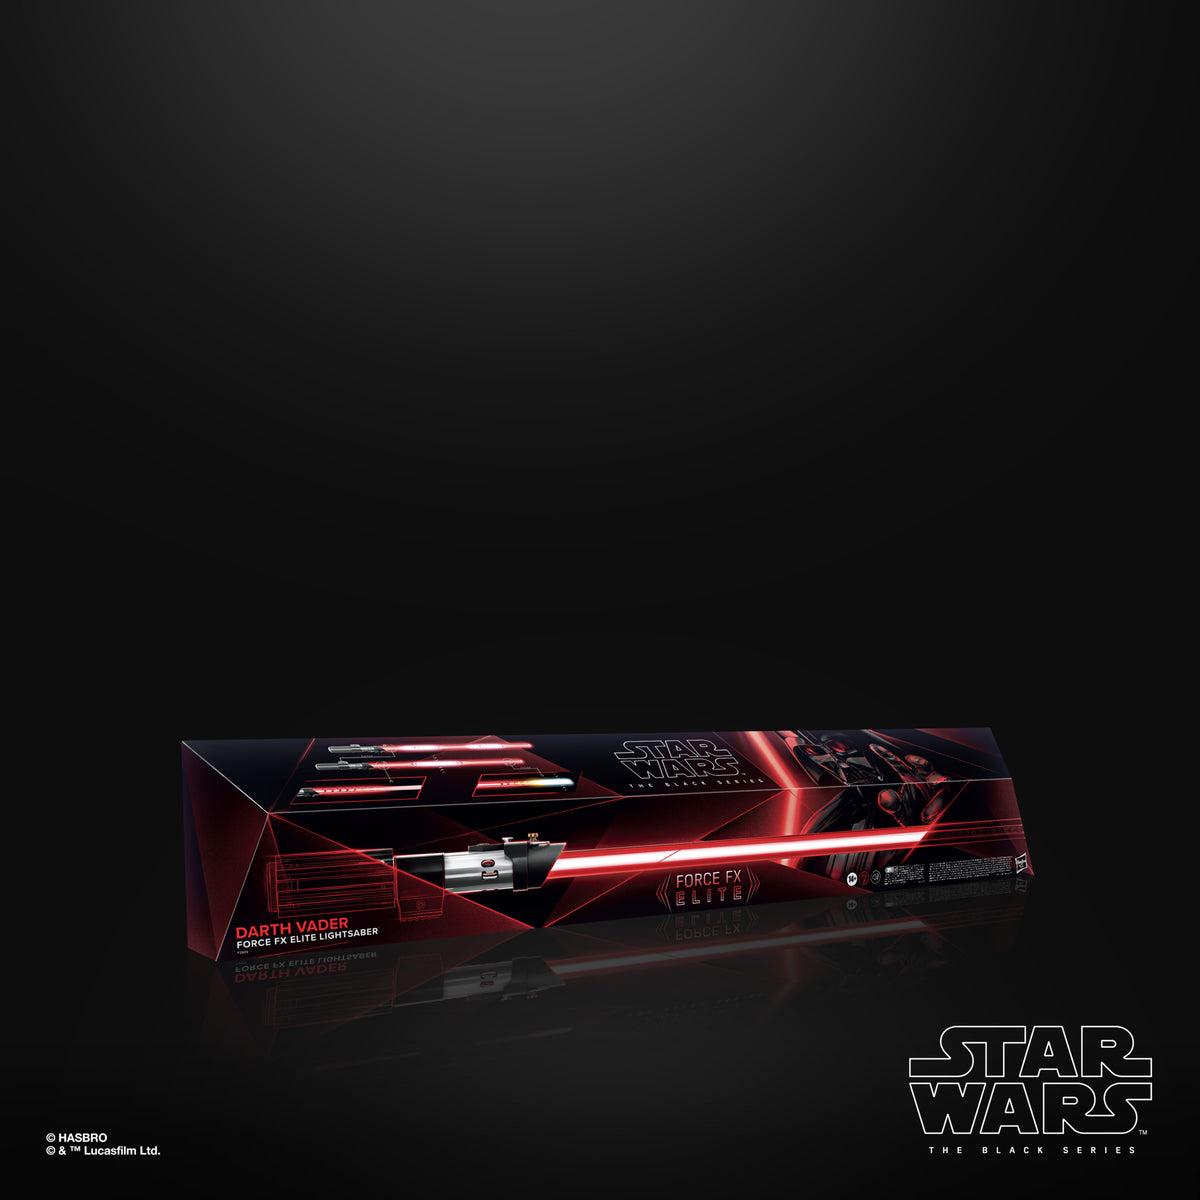 Star Wars The Black Series Rey Force FX Elite Sable láser estándar